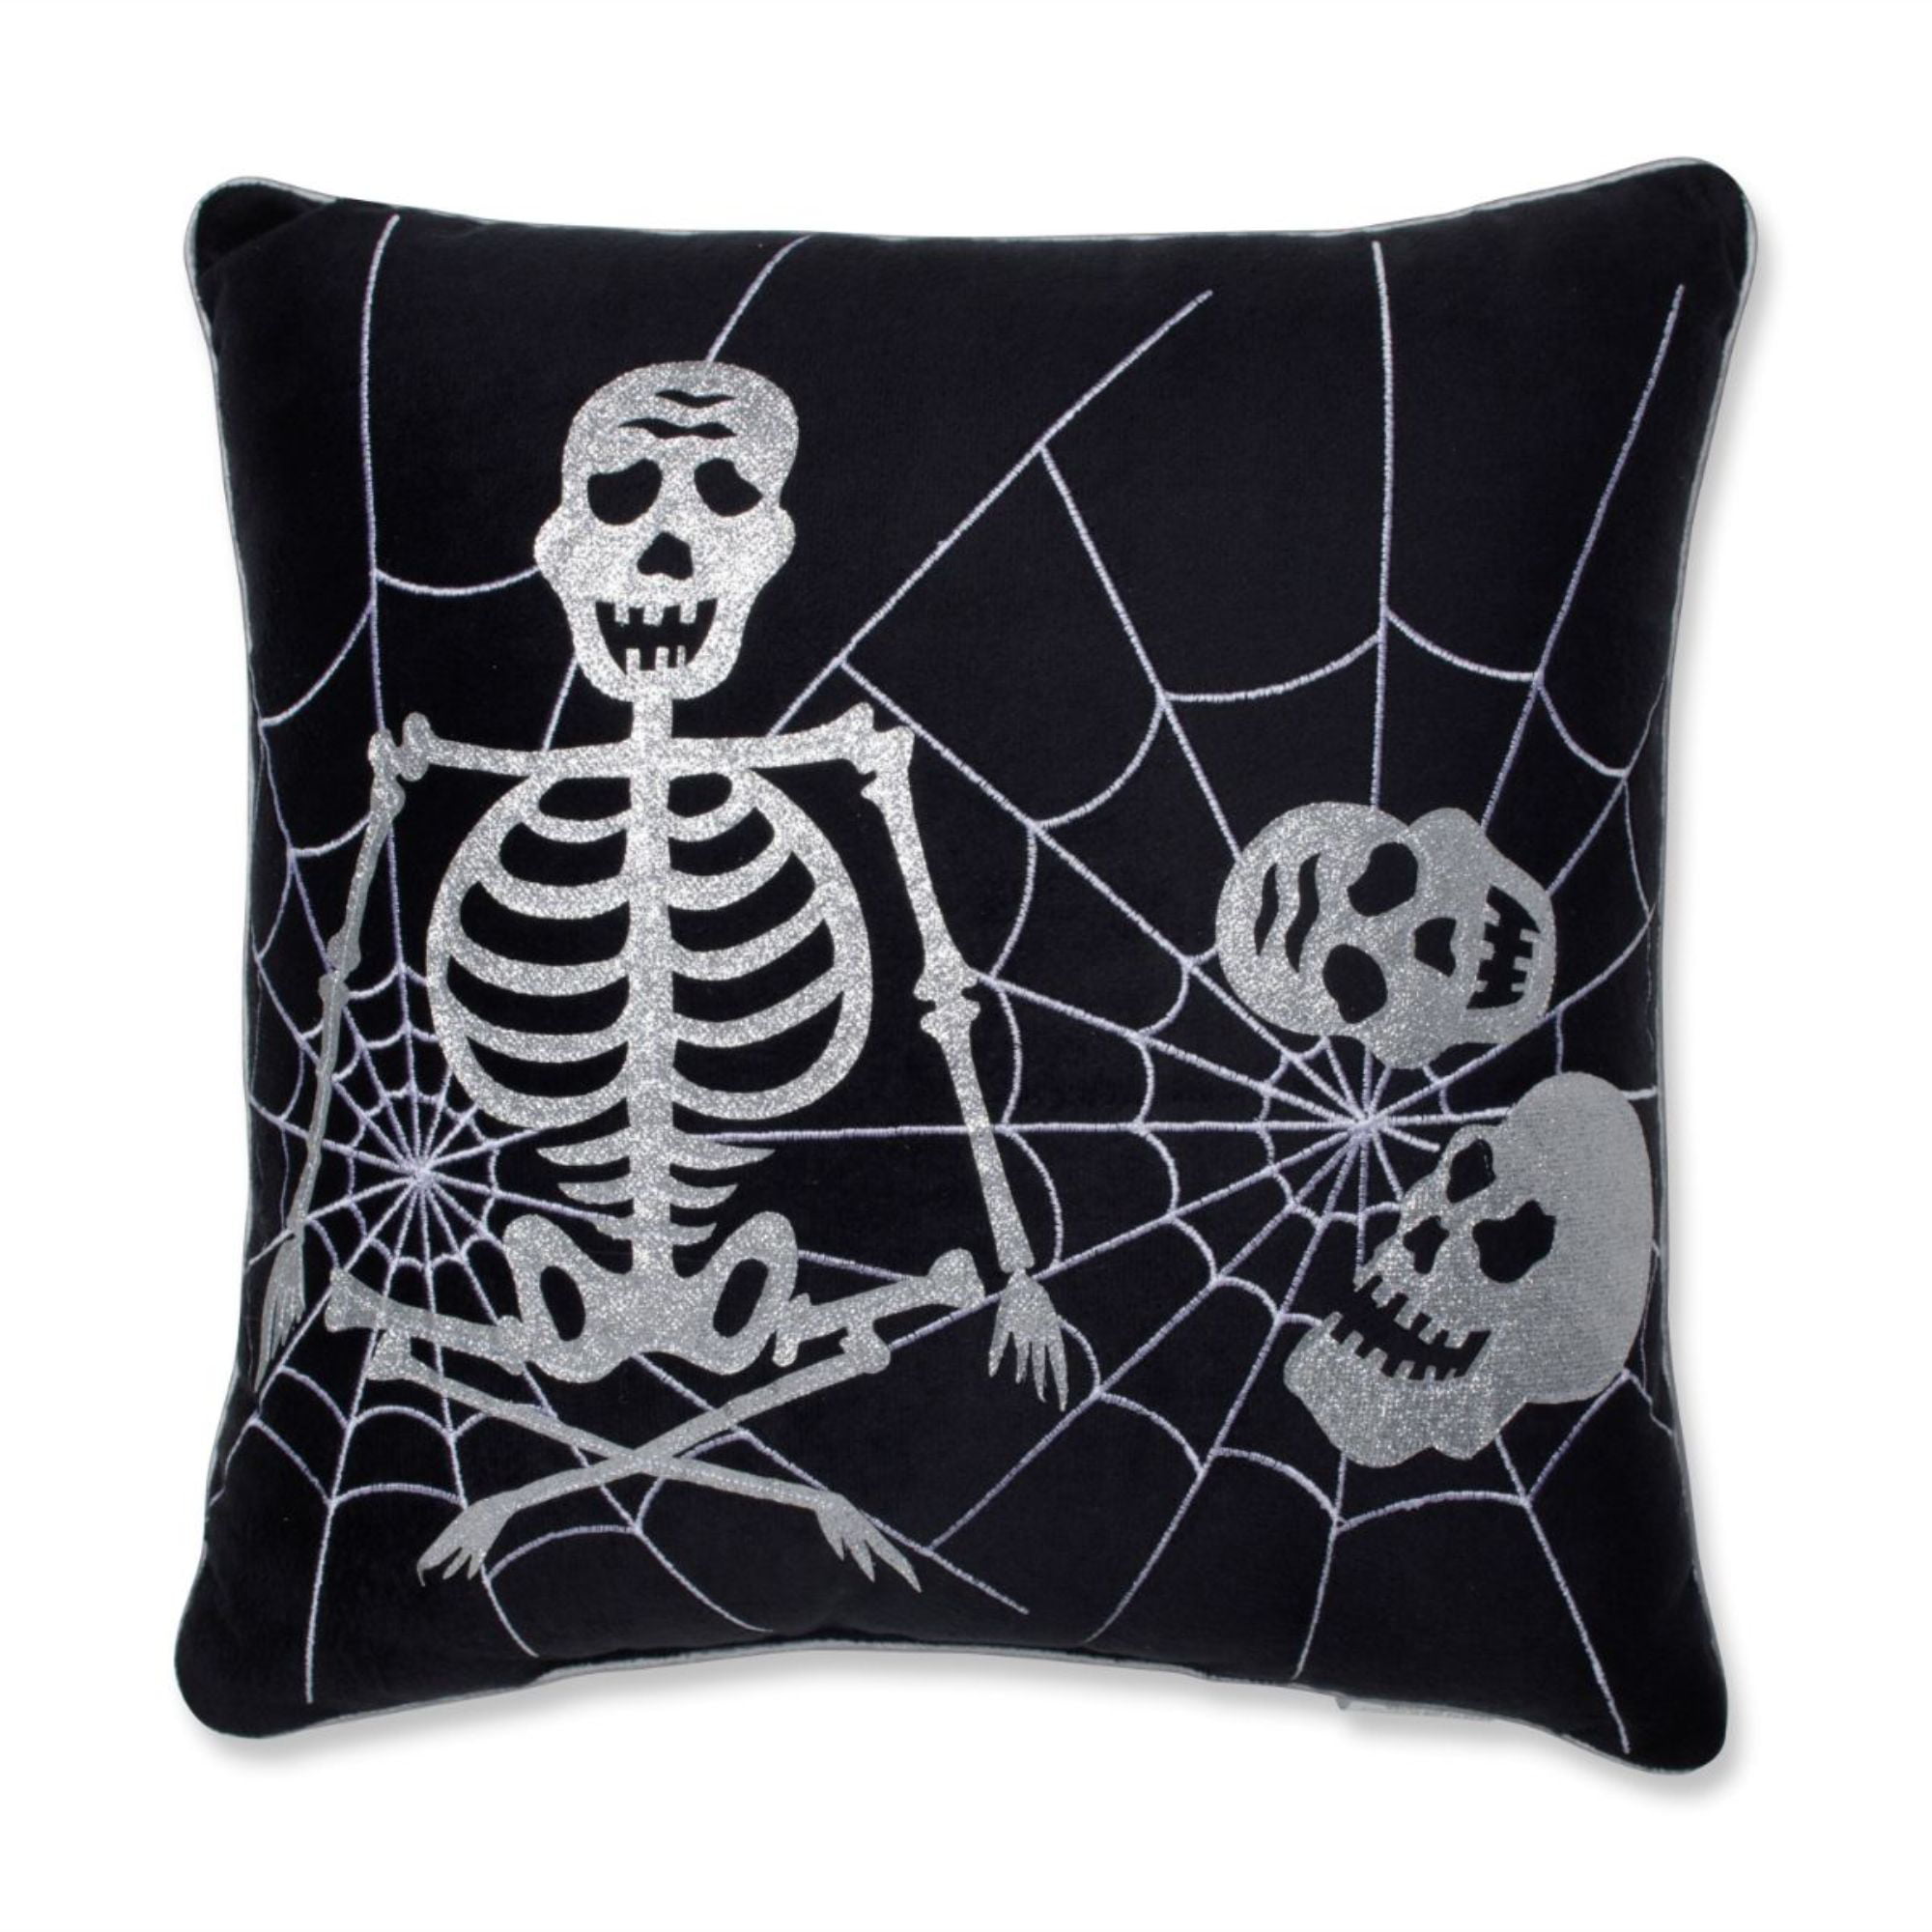 TOYANDONA Set of 4 Halloween Throw Pillow Covers Halloween Skeleton Printing Pillowcase Cushion Case for Sofa Bed Chair Home Decor